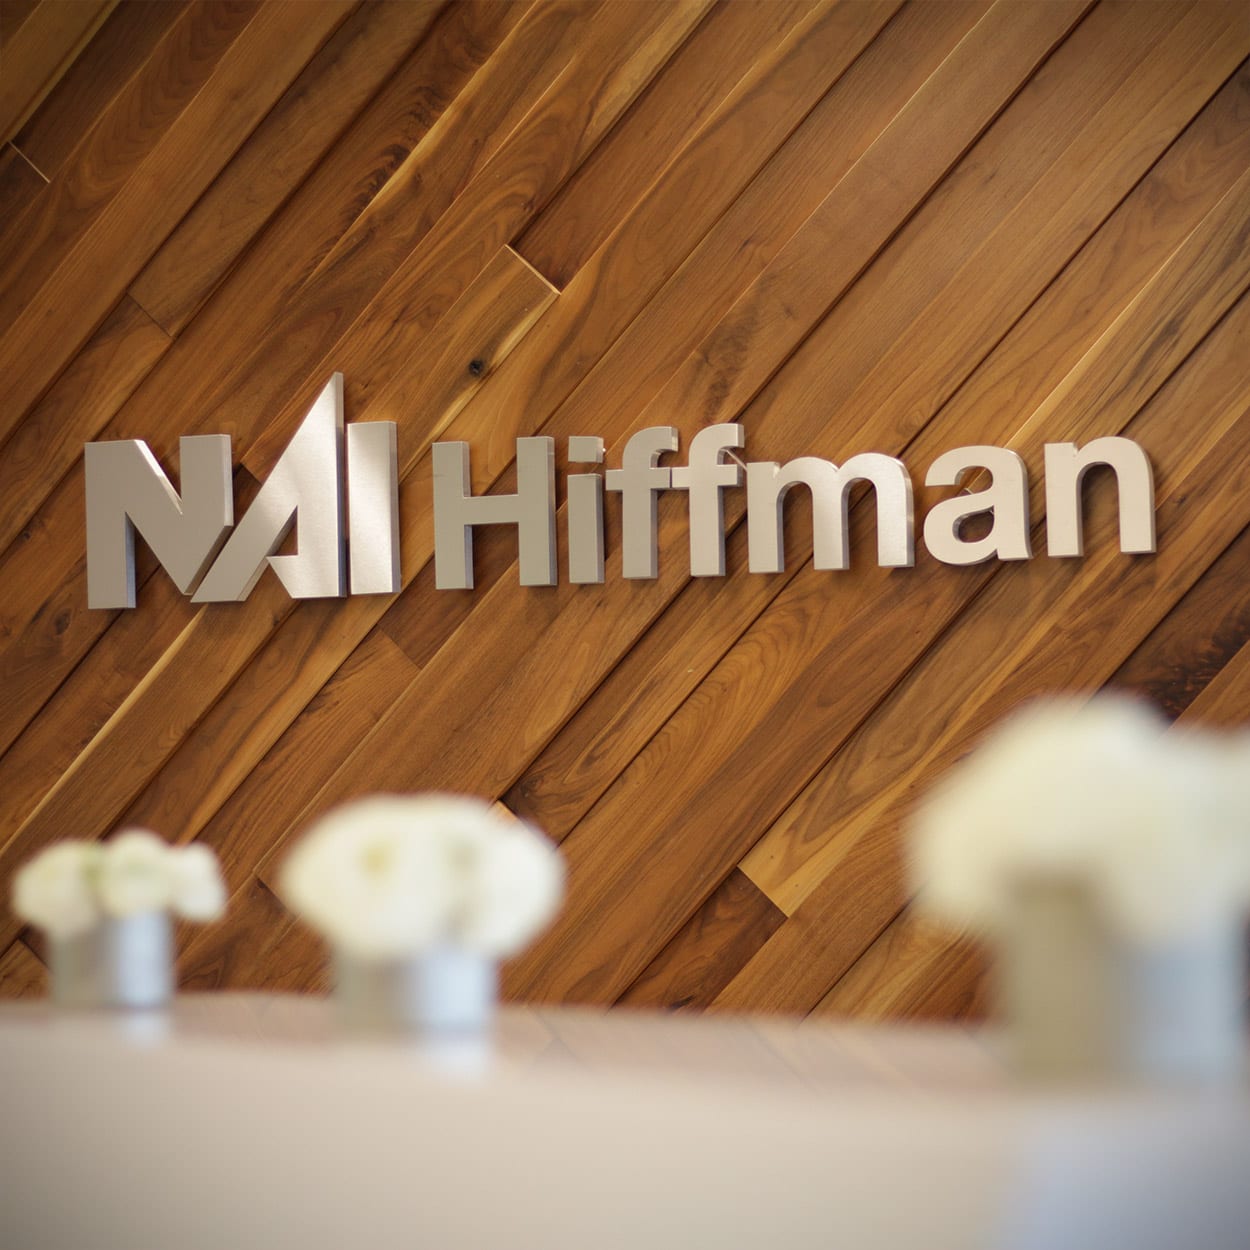 NAI Hiffman headquarters